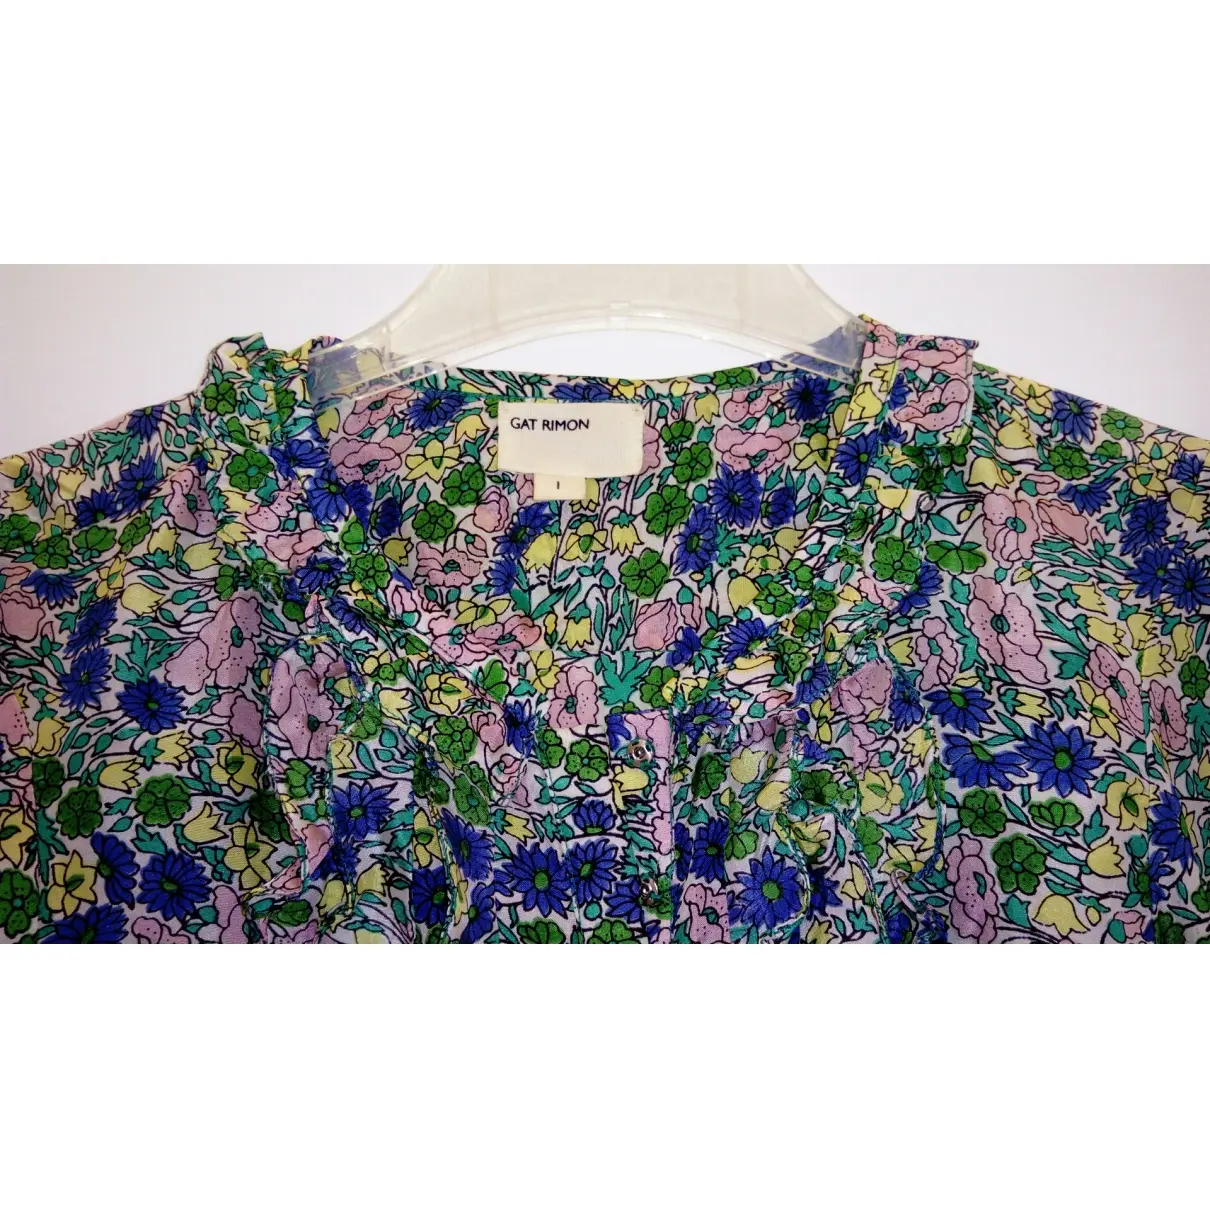 Buy Gat Rimon Silk blouse online